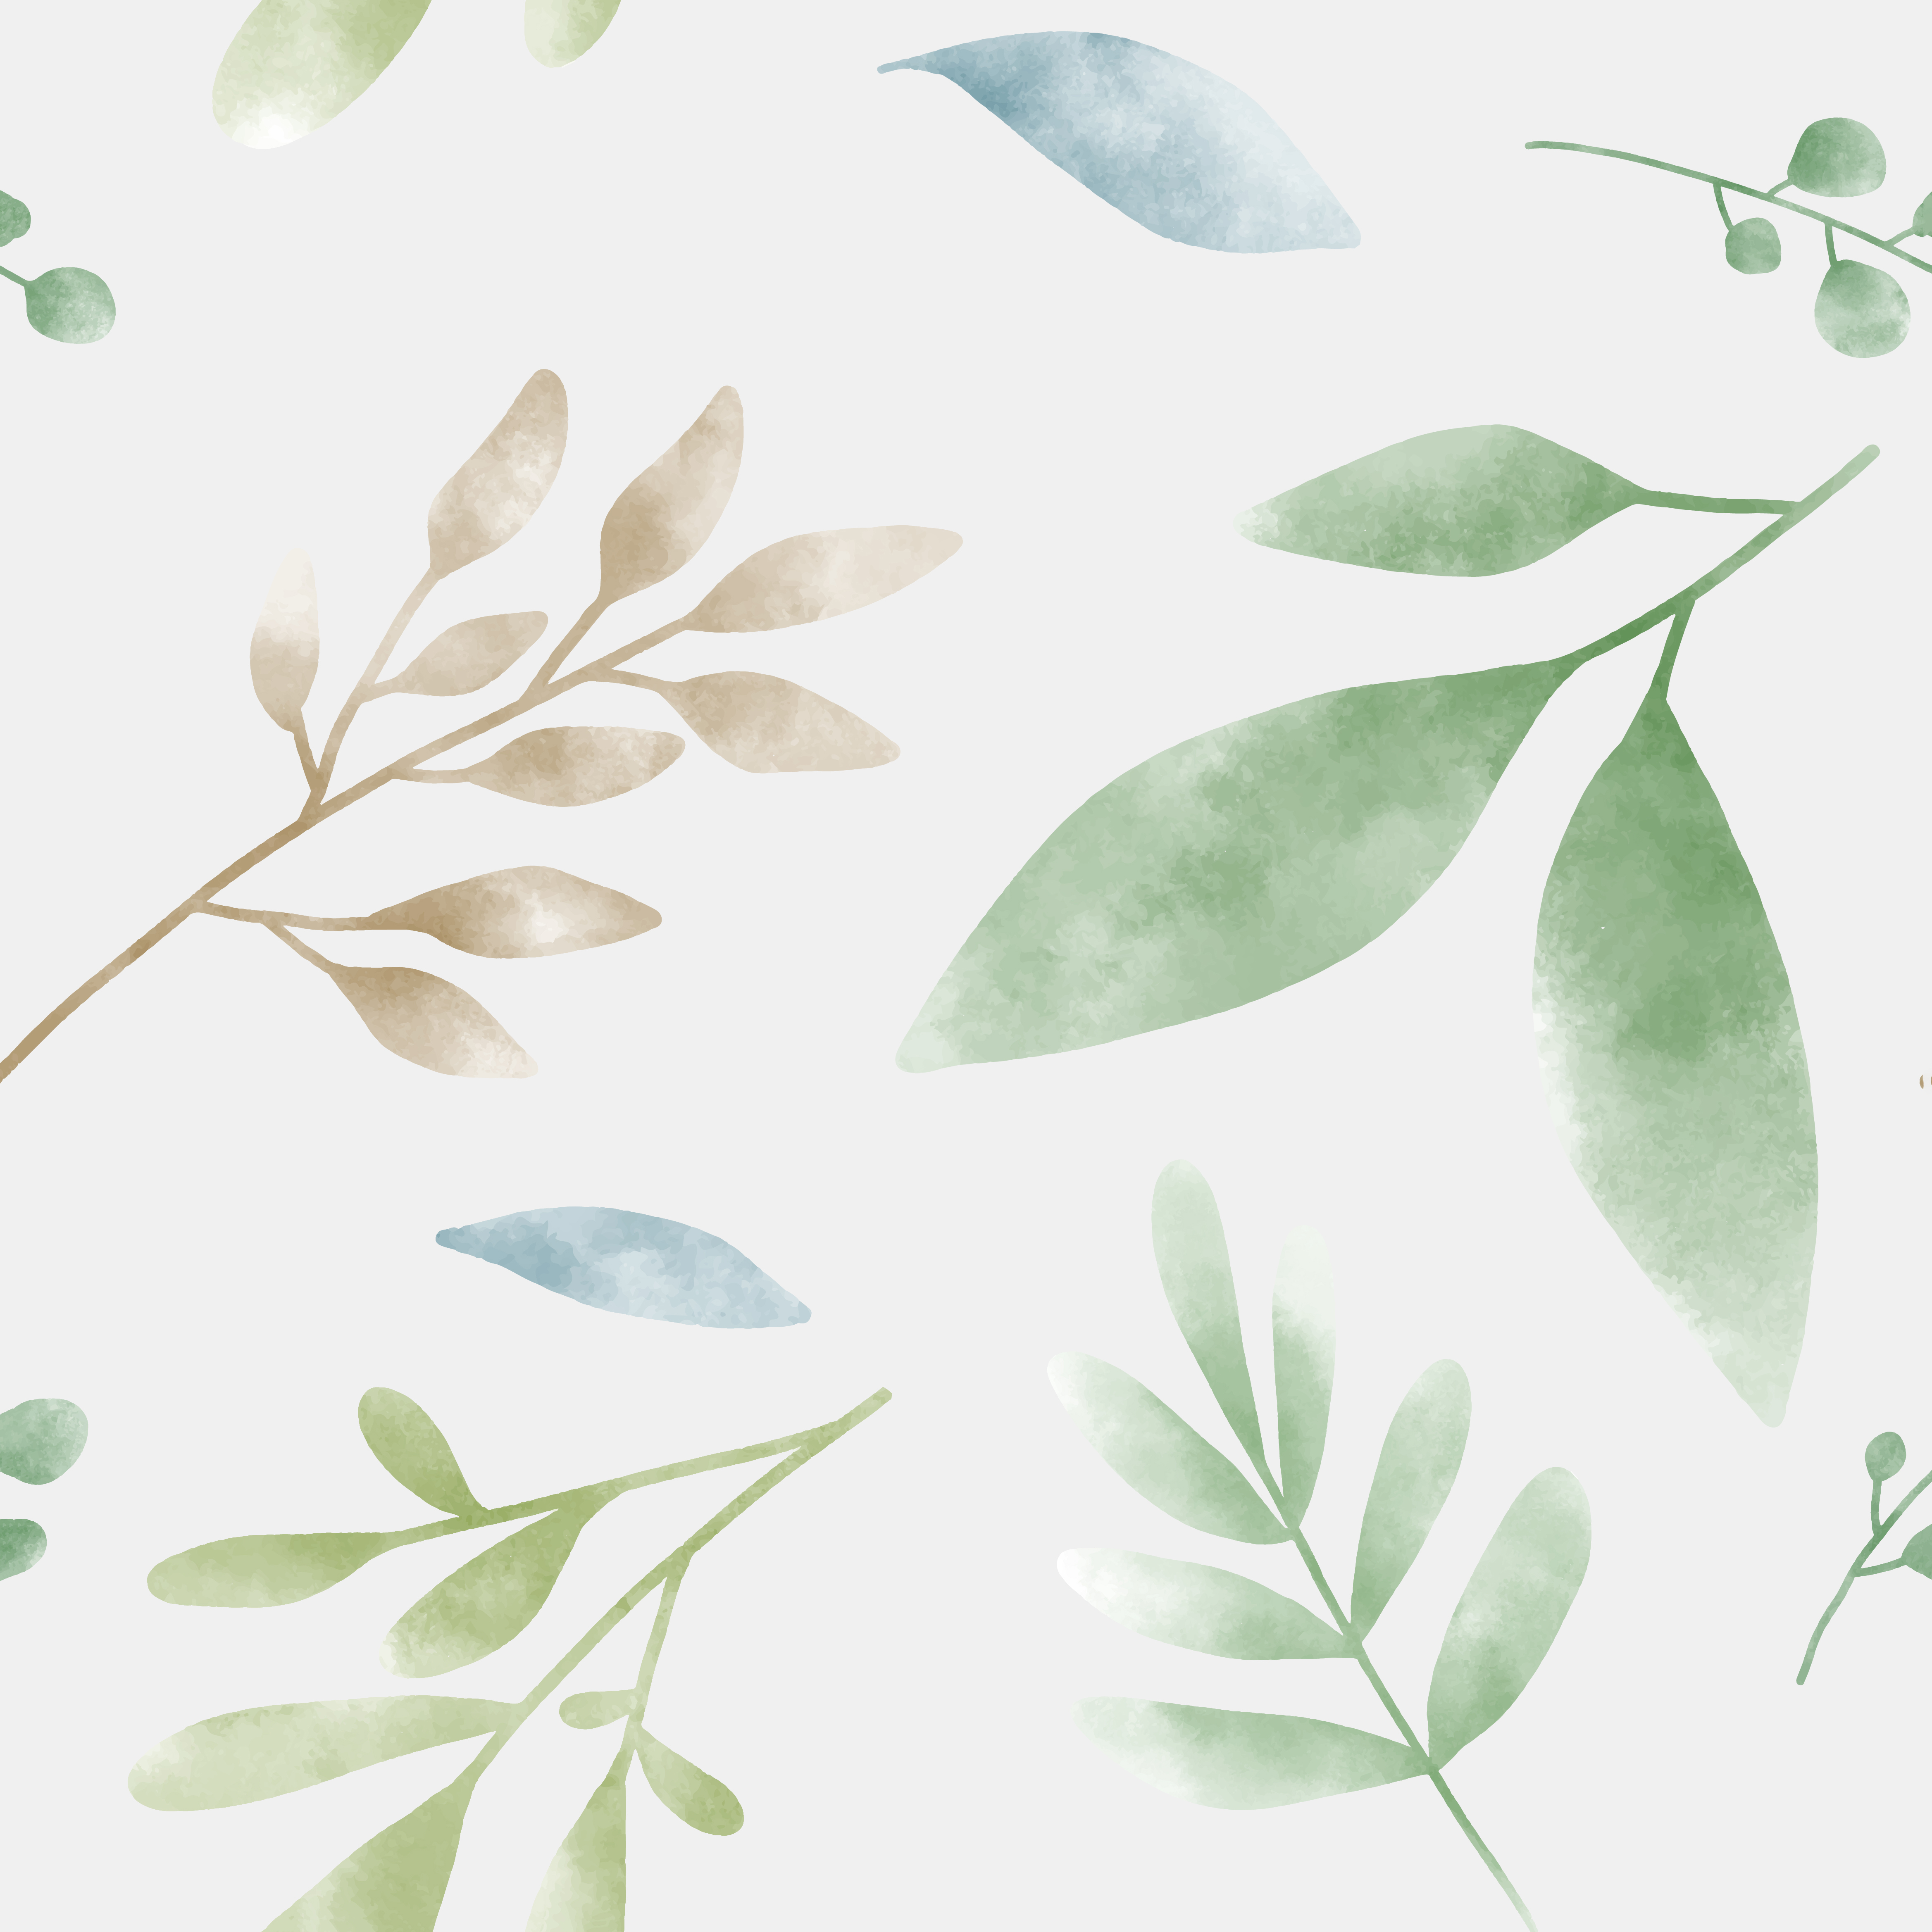 Watercolor green leaf patterns vector - Download Free Vectors, Clipart